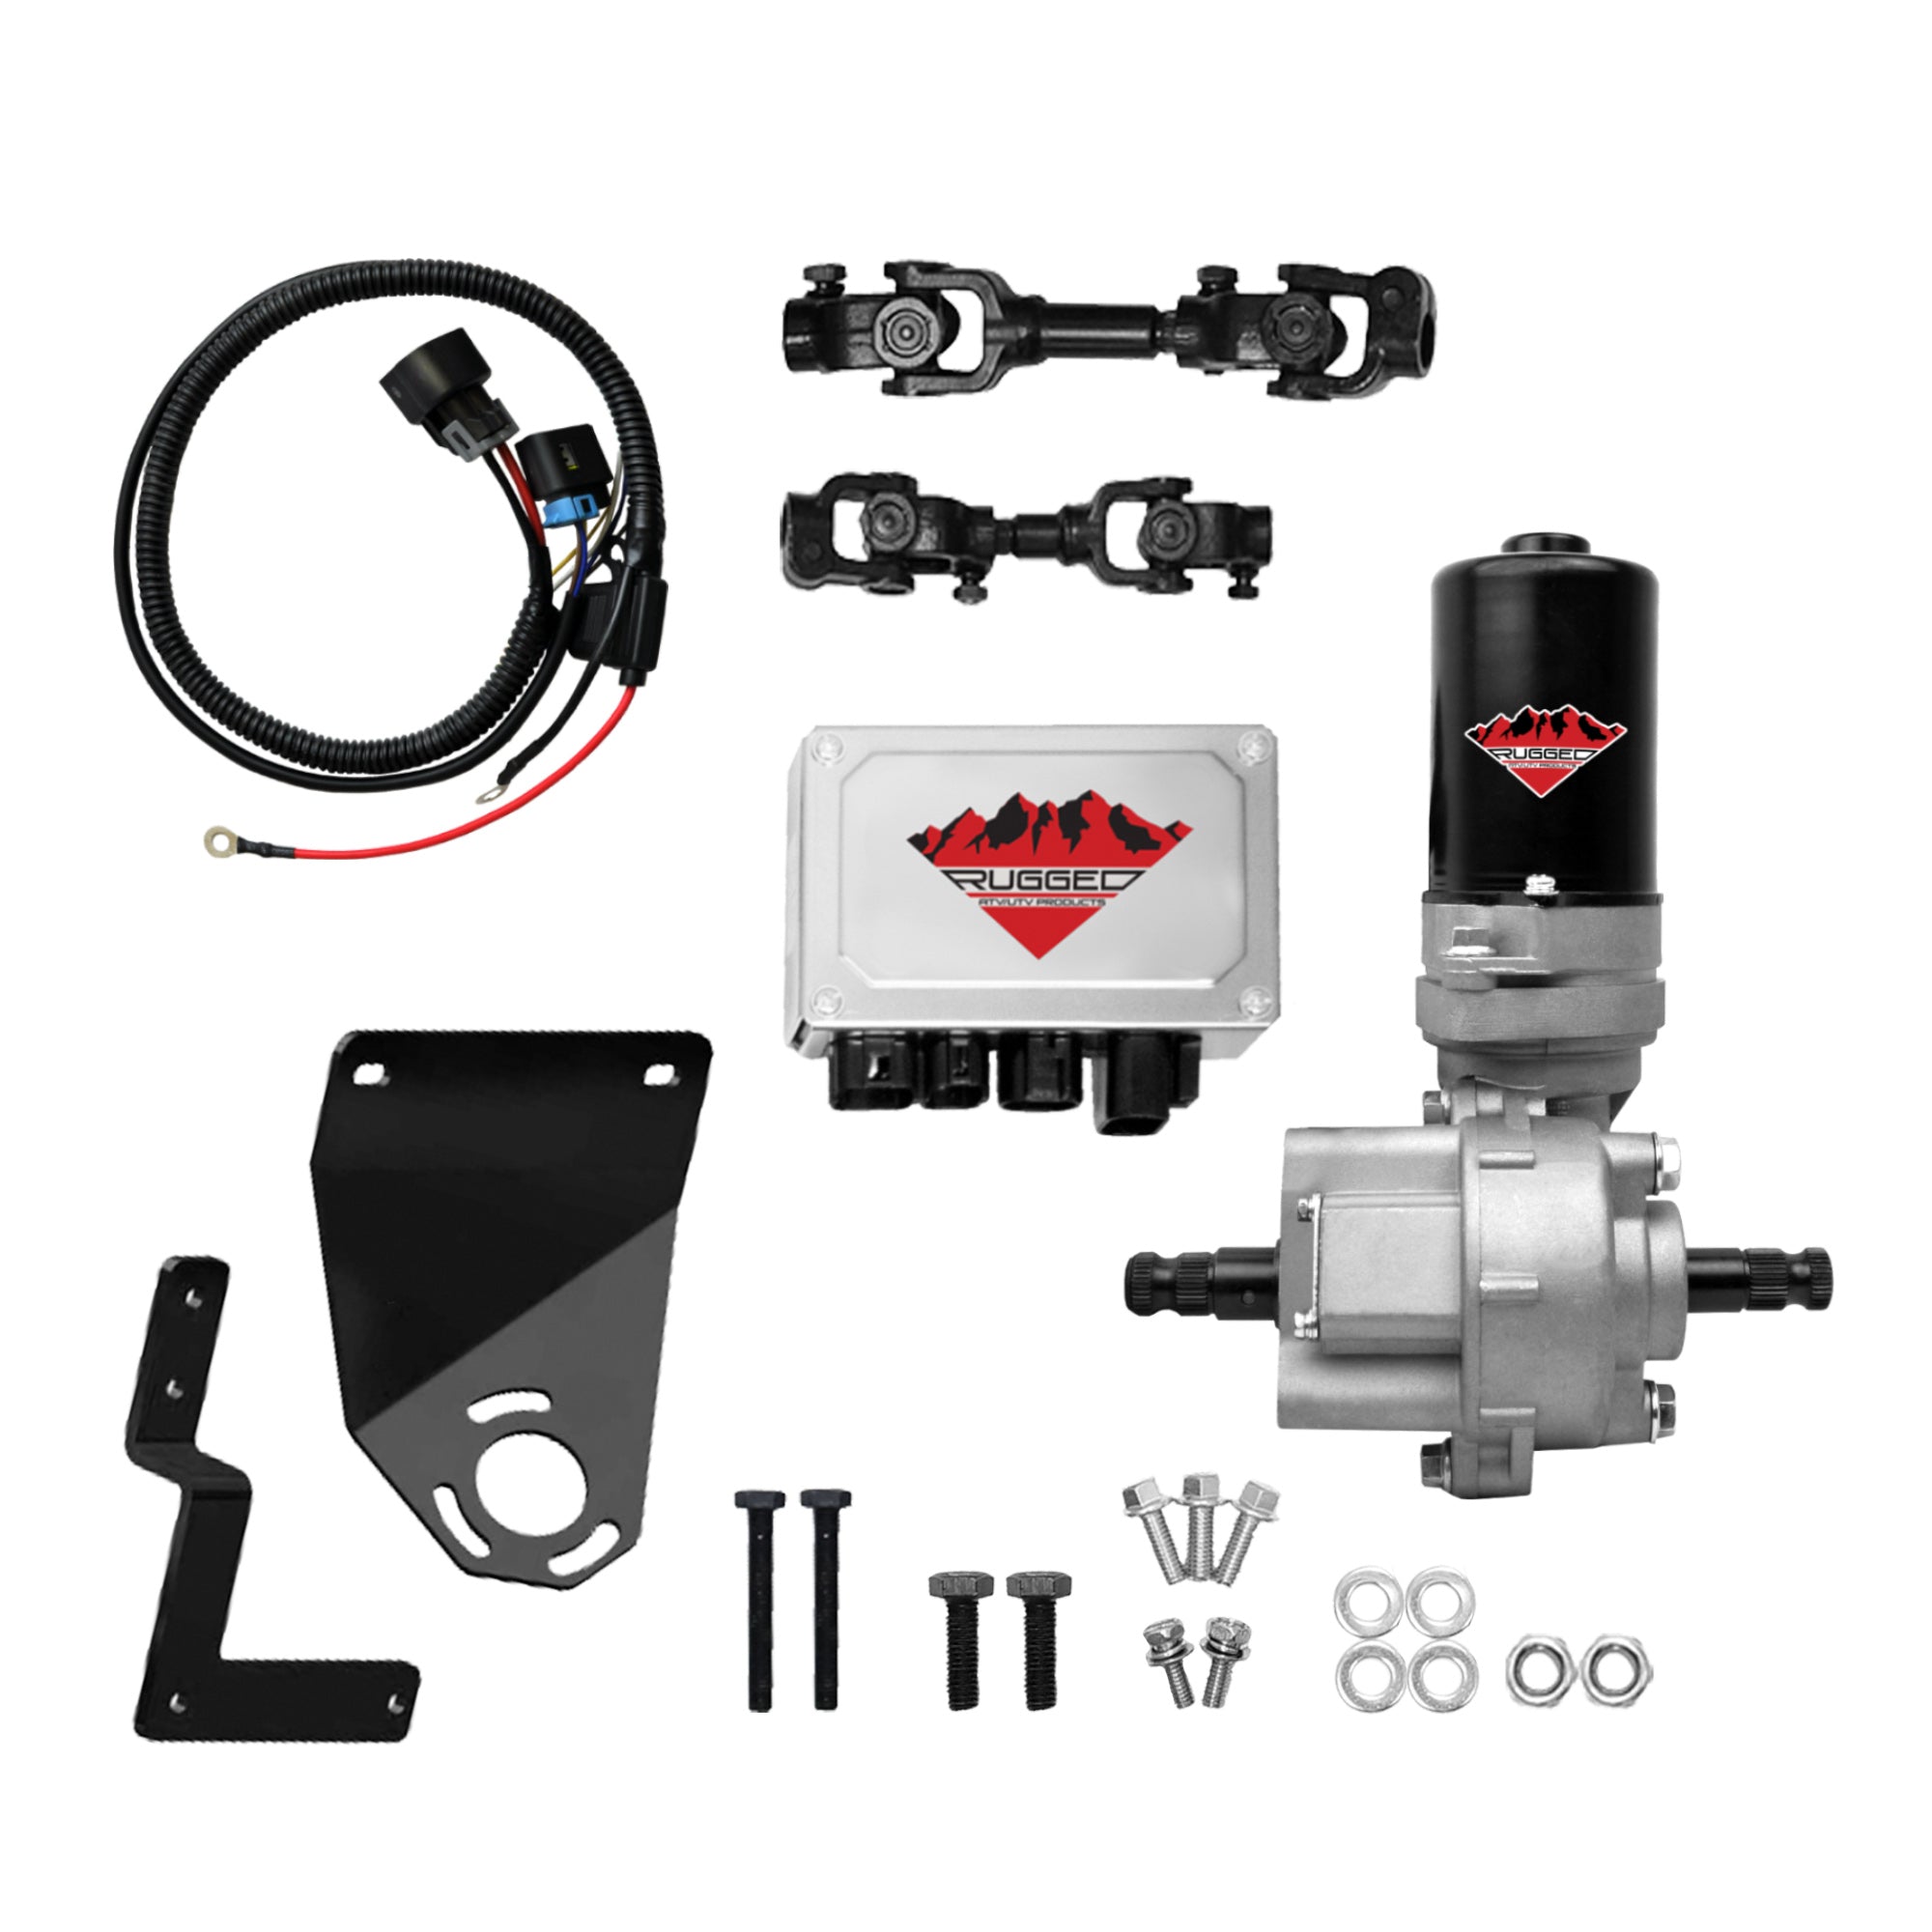 Electric Power Steering Kit for Kawasaki Teryx 800 